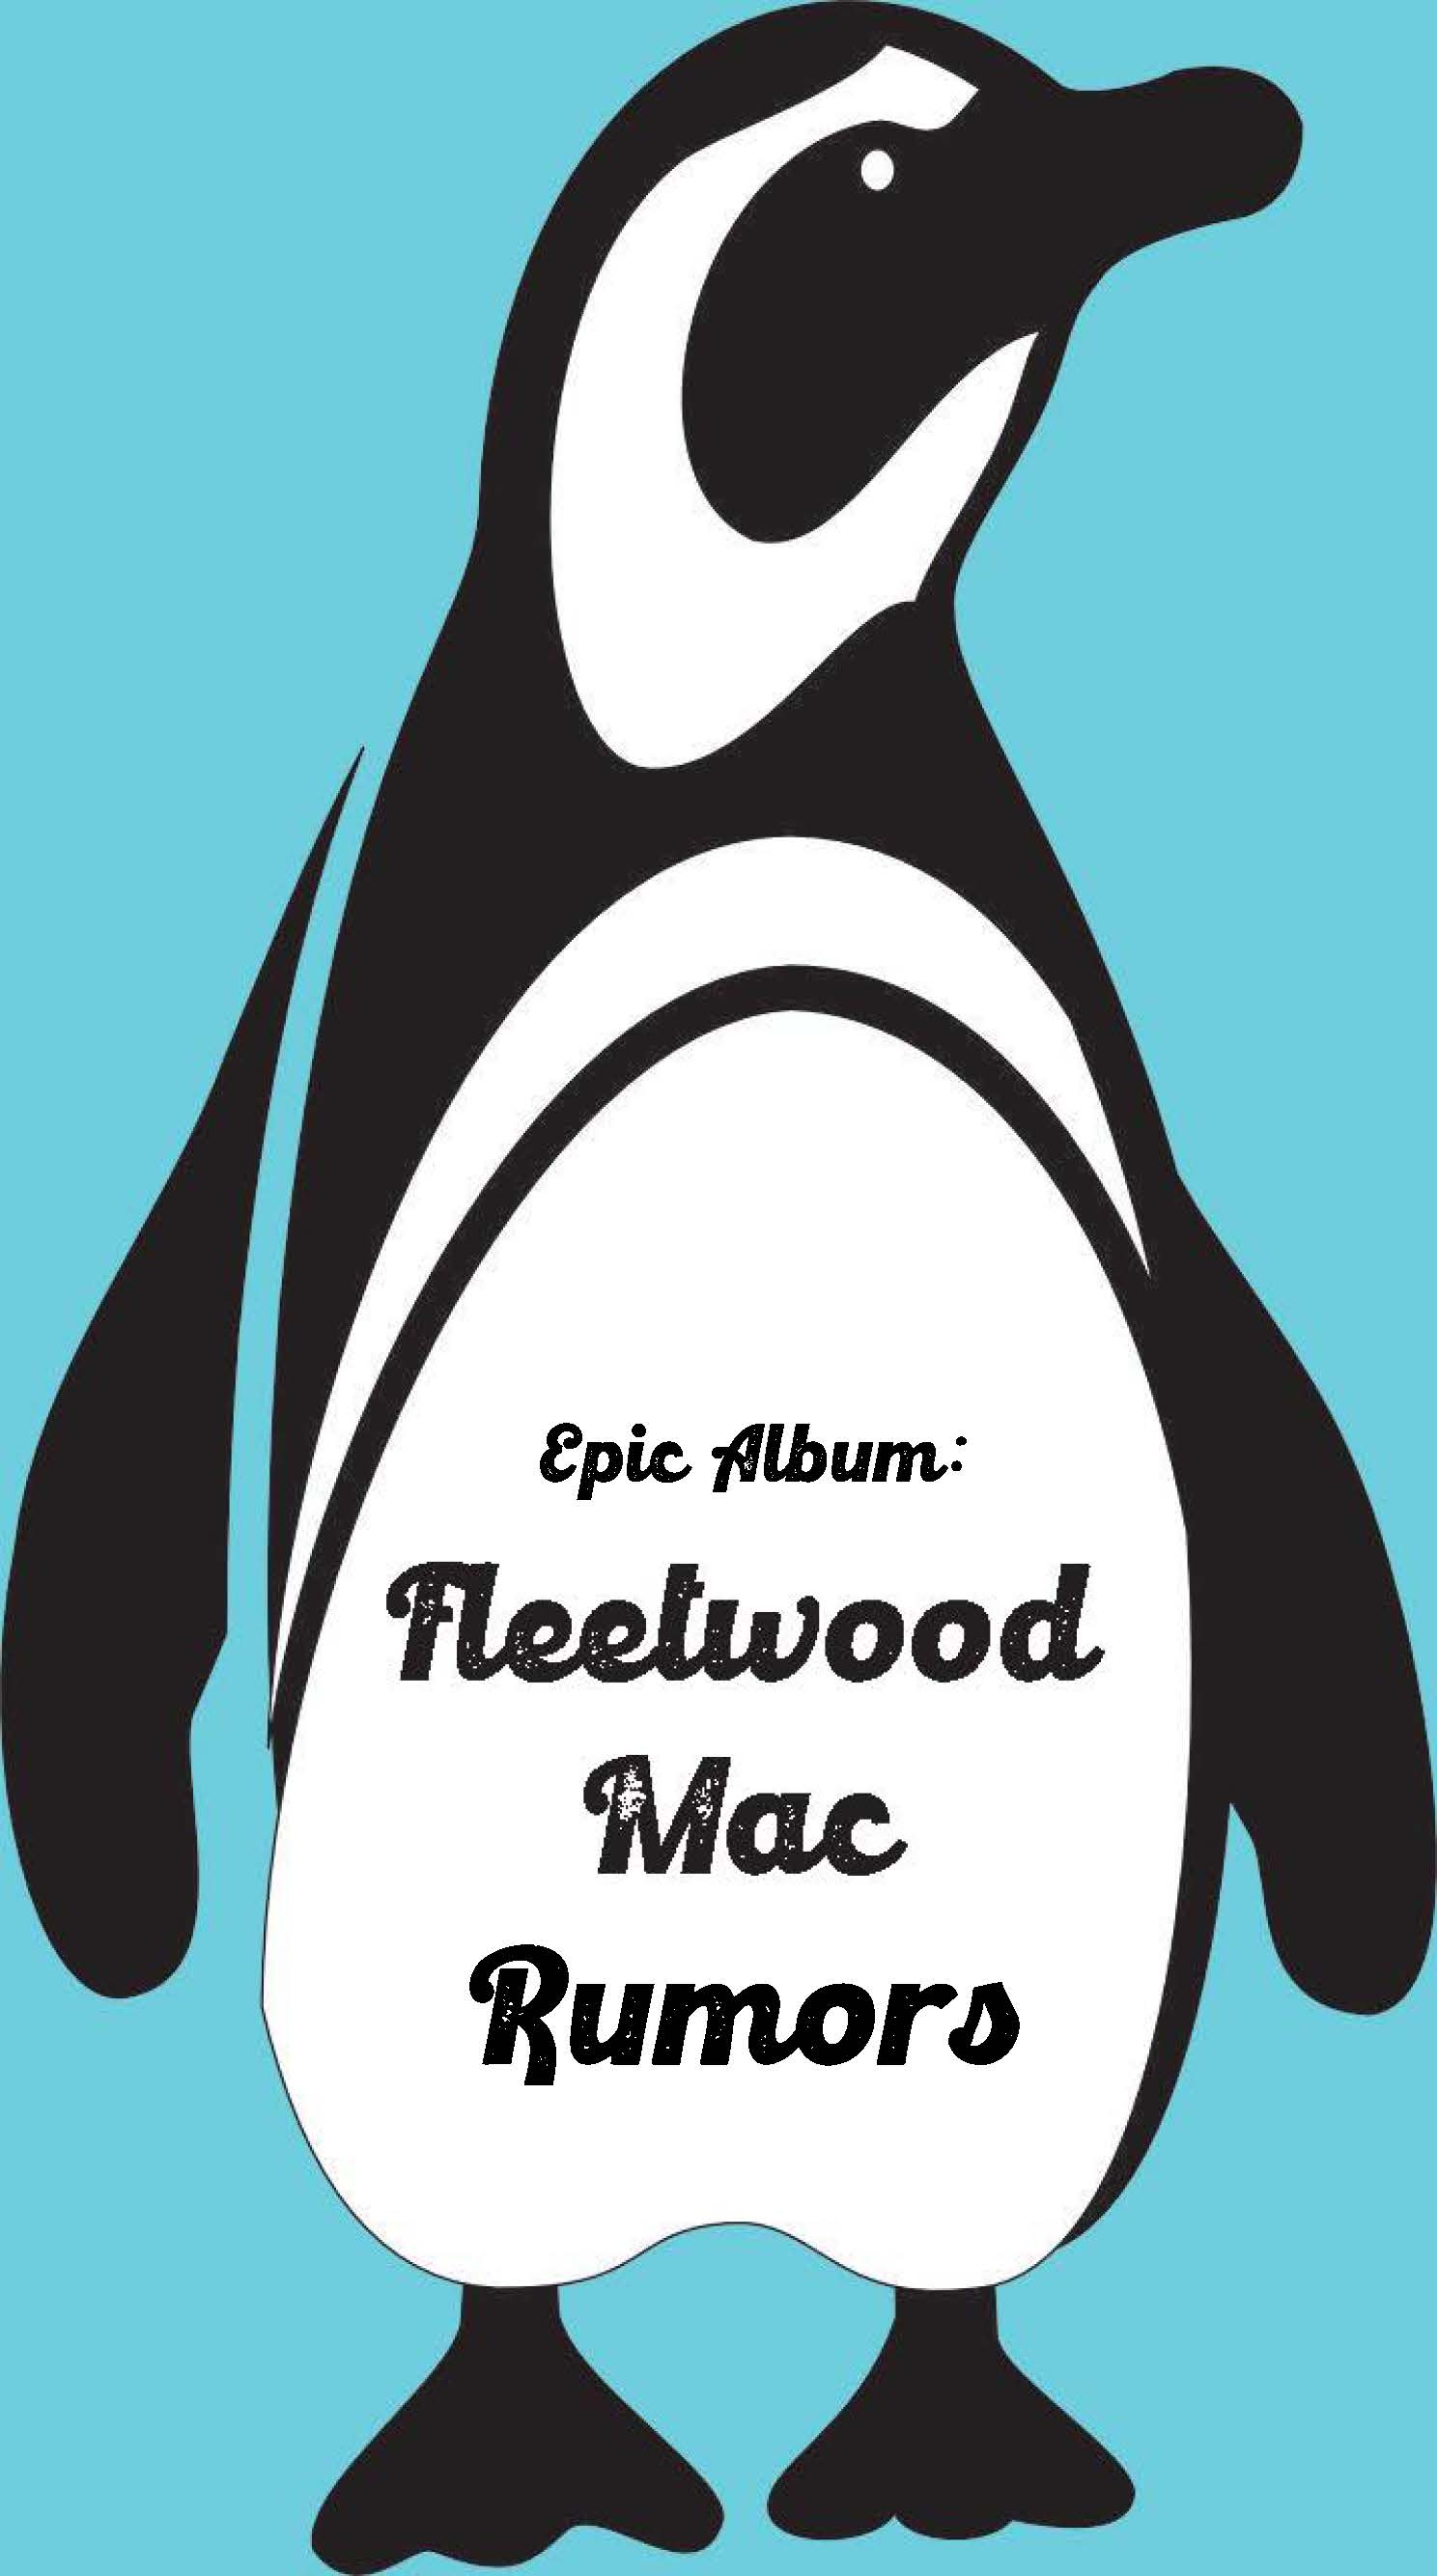 Fleetwood Mac Rumors